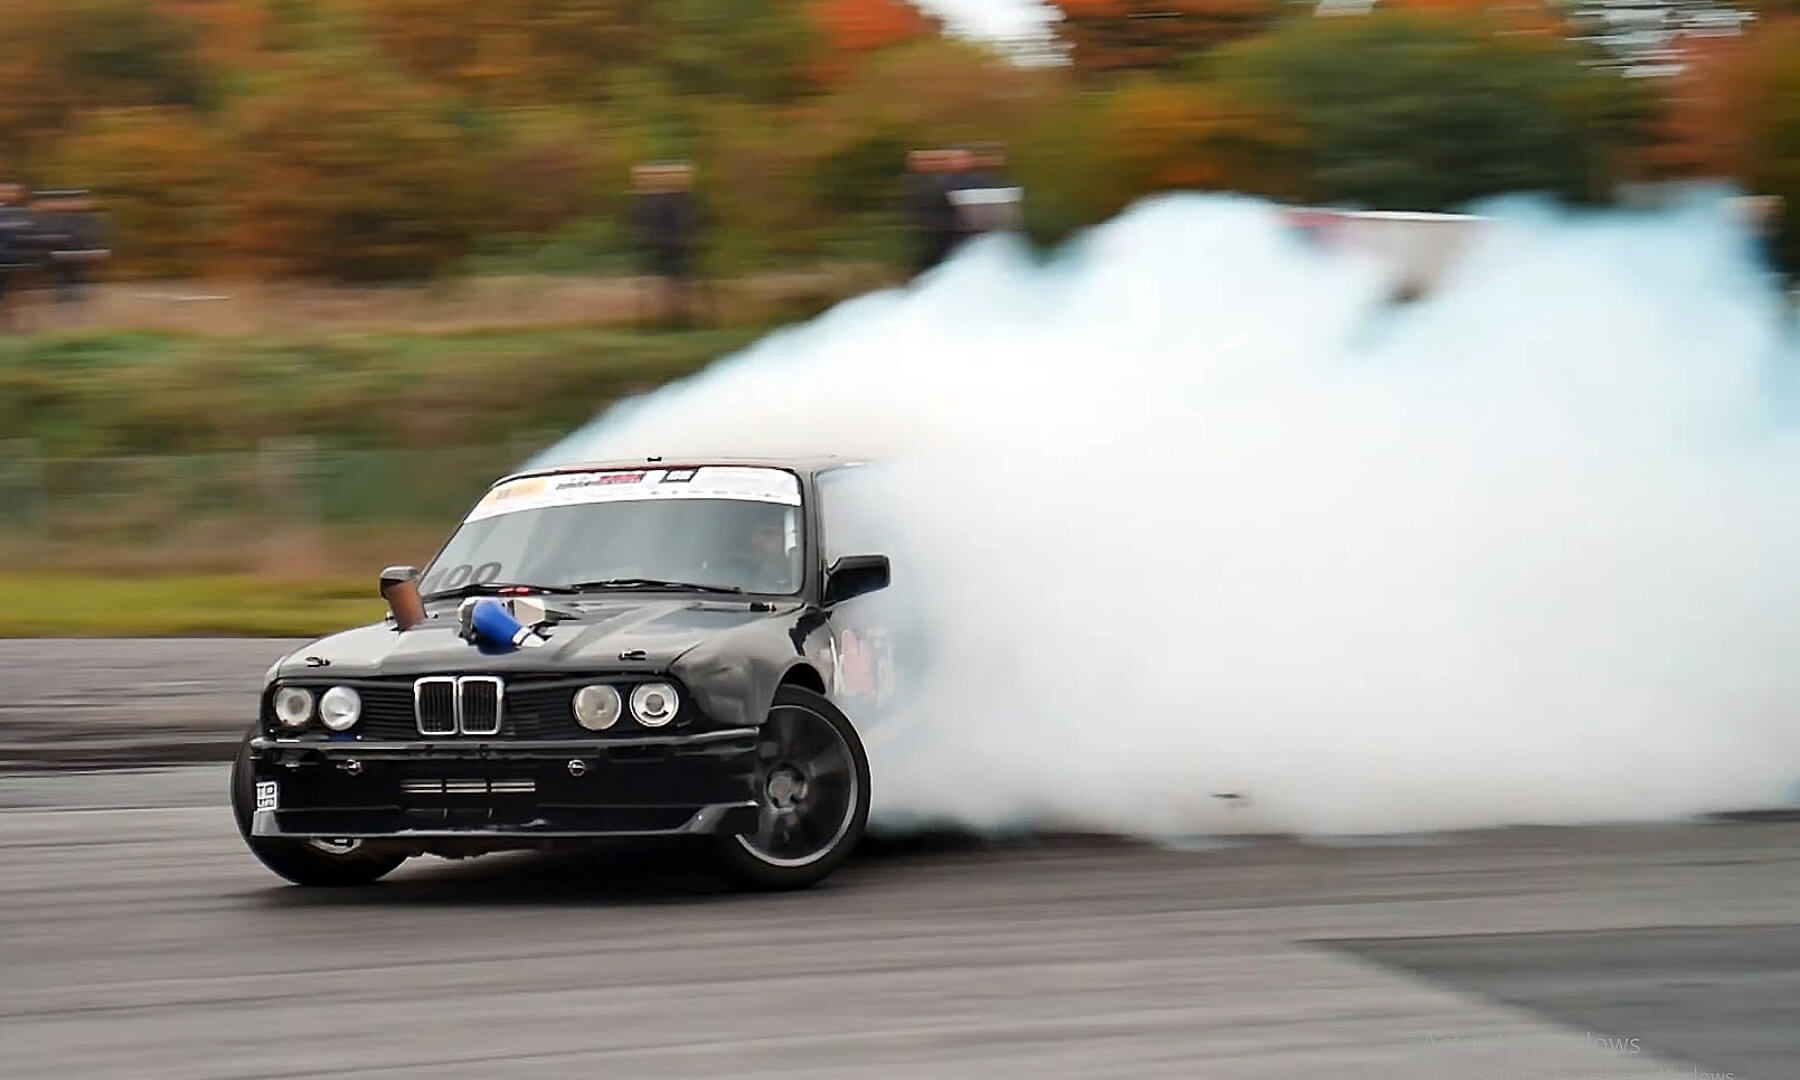 Turbocharged V12 BMW E30 Drift Car [video]